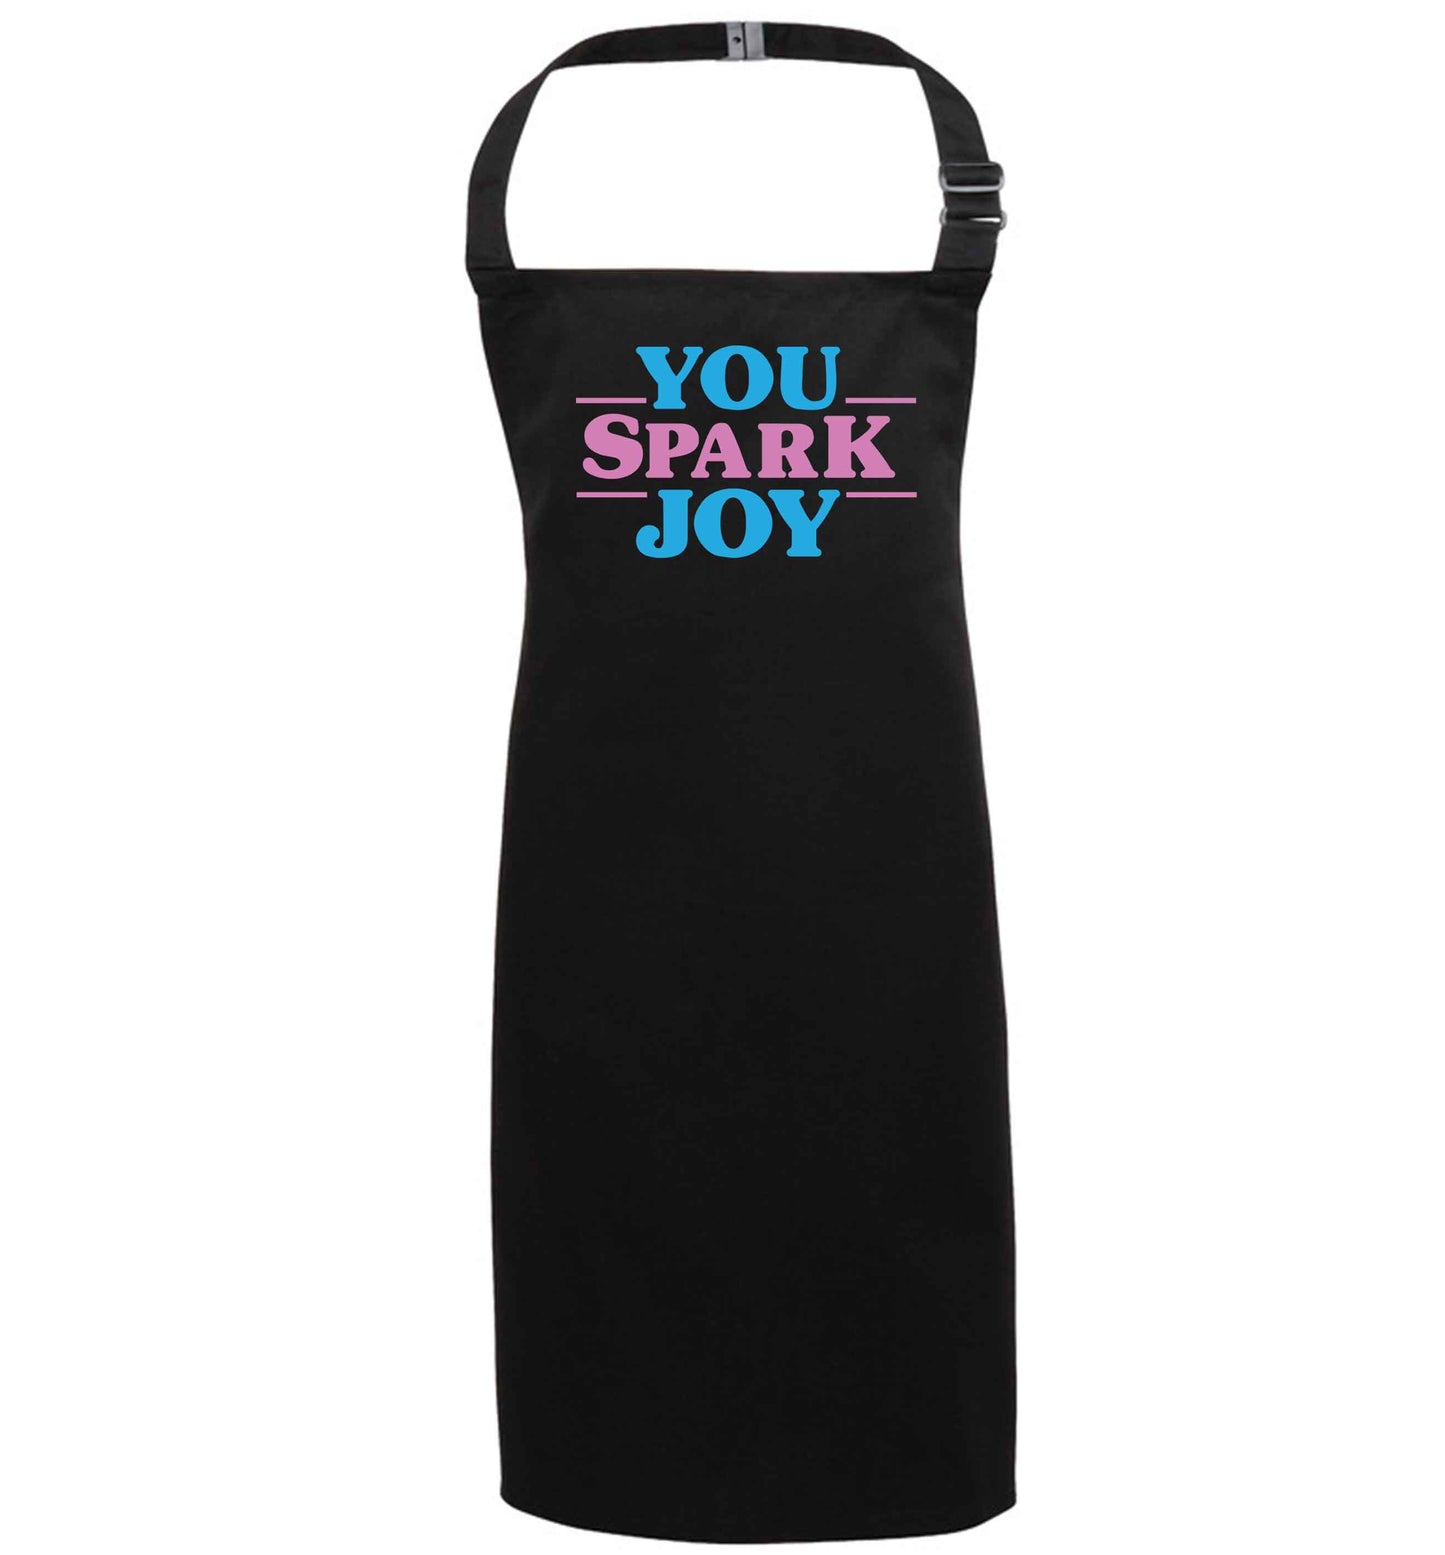 You spark joy black apron 7-10 years